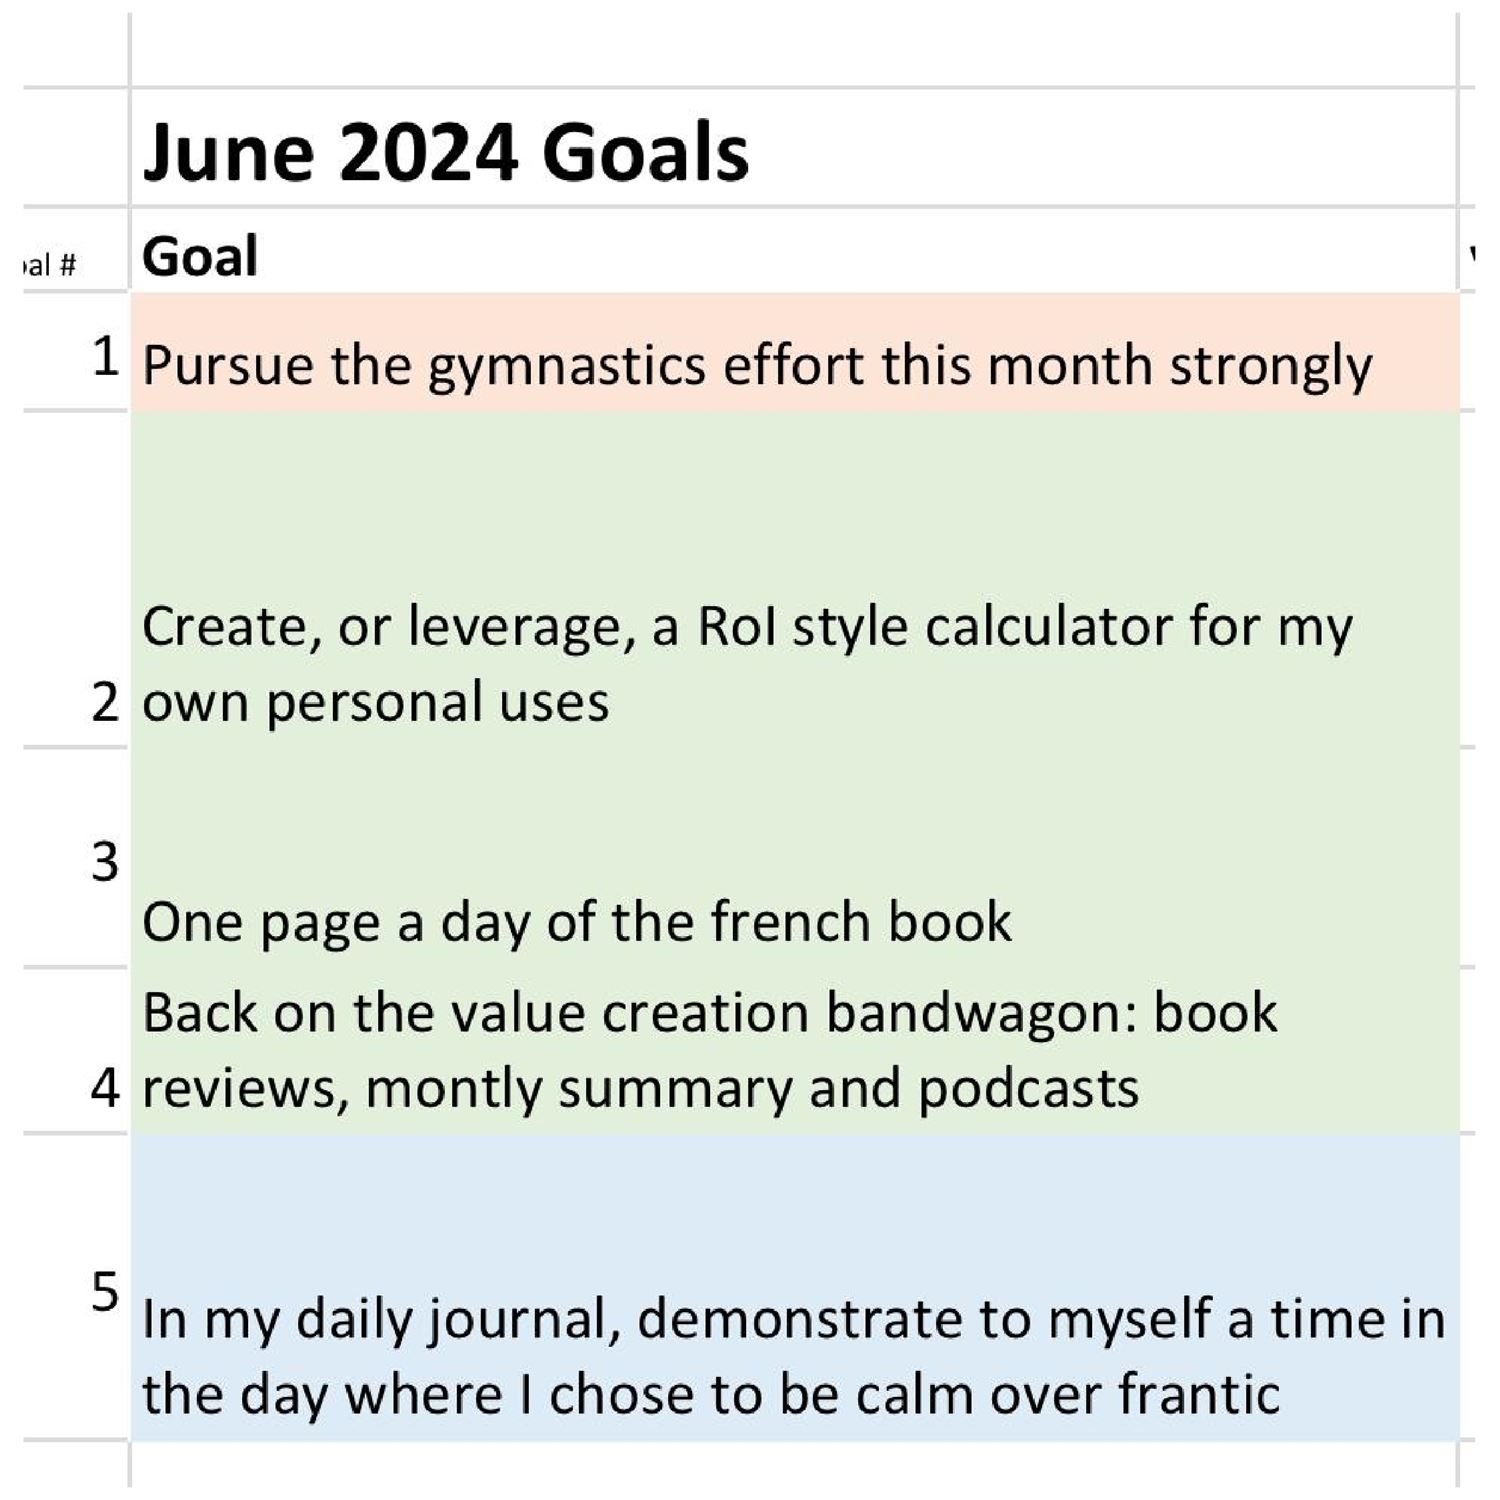 Juan's June 2024 Goals